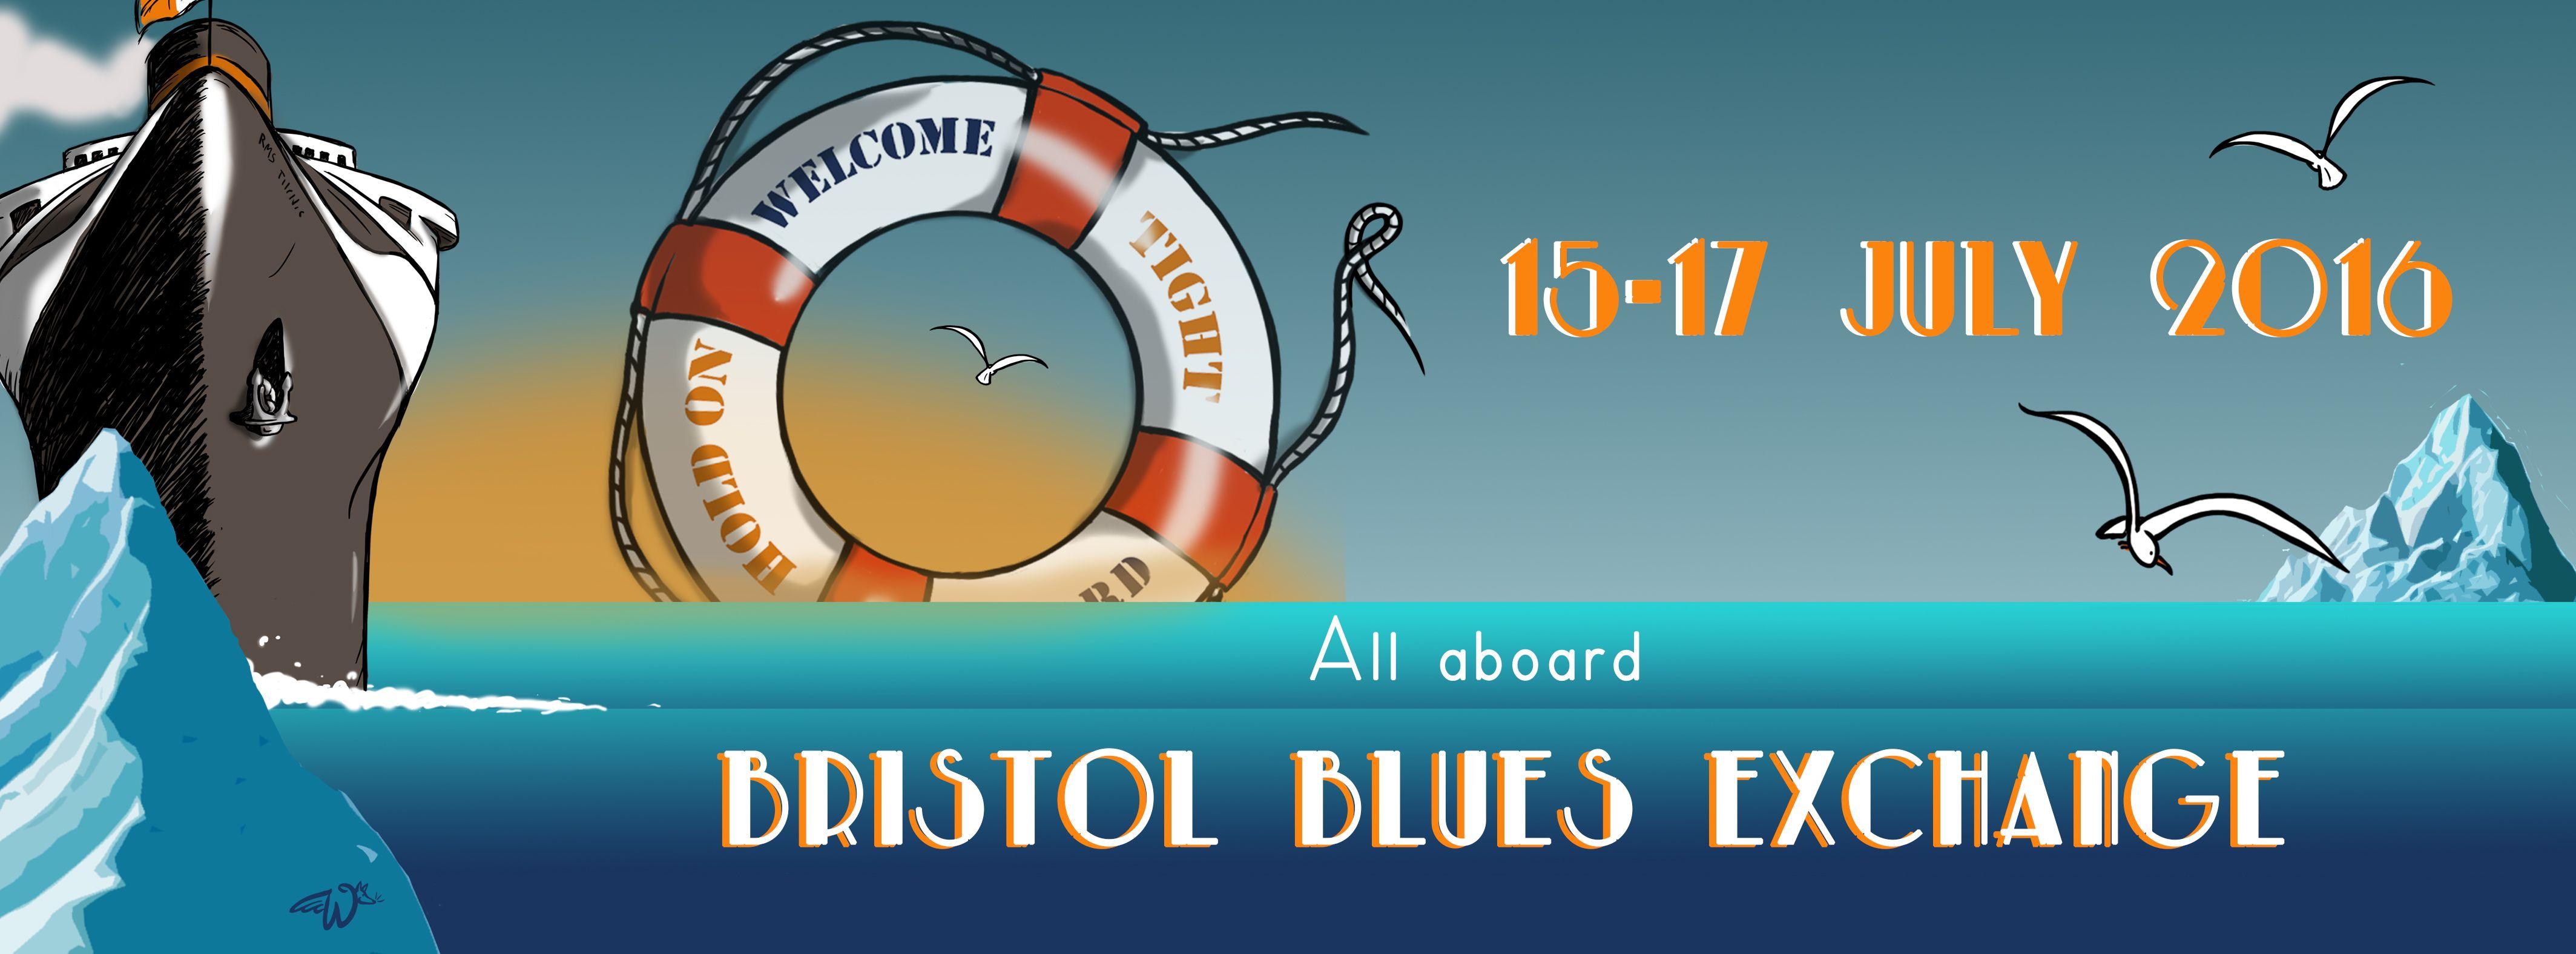 Bristol Blues Logo - Home | Bristol Blues Exchange